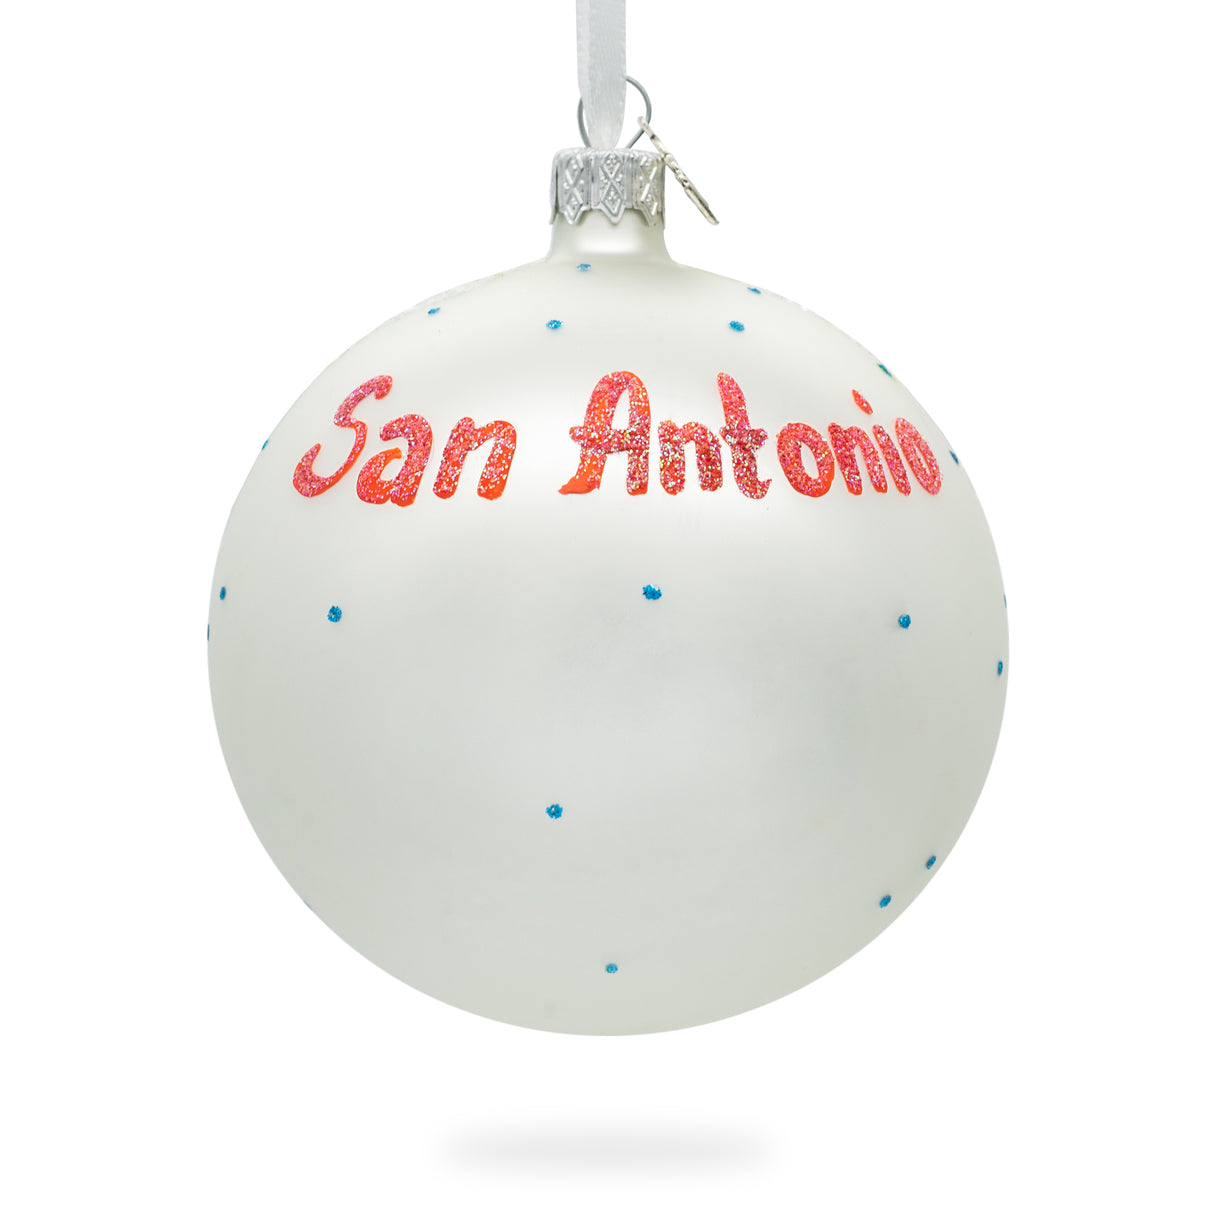 Buy Christmas Ornaments > Travel > North America > USA > Texas > San Antonio by BestPysanky Online Gift Ship